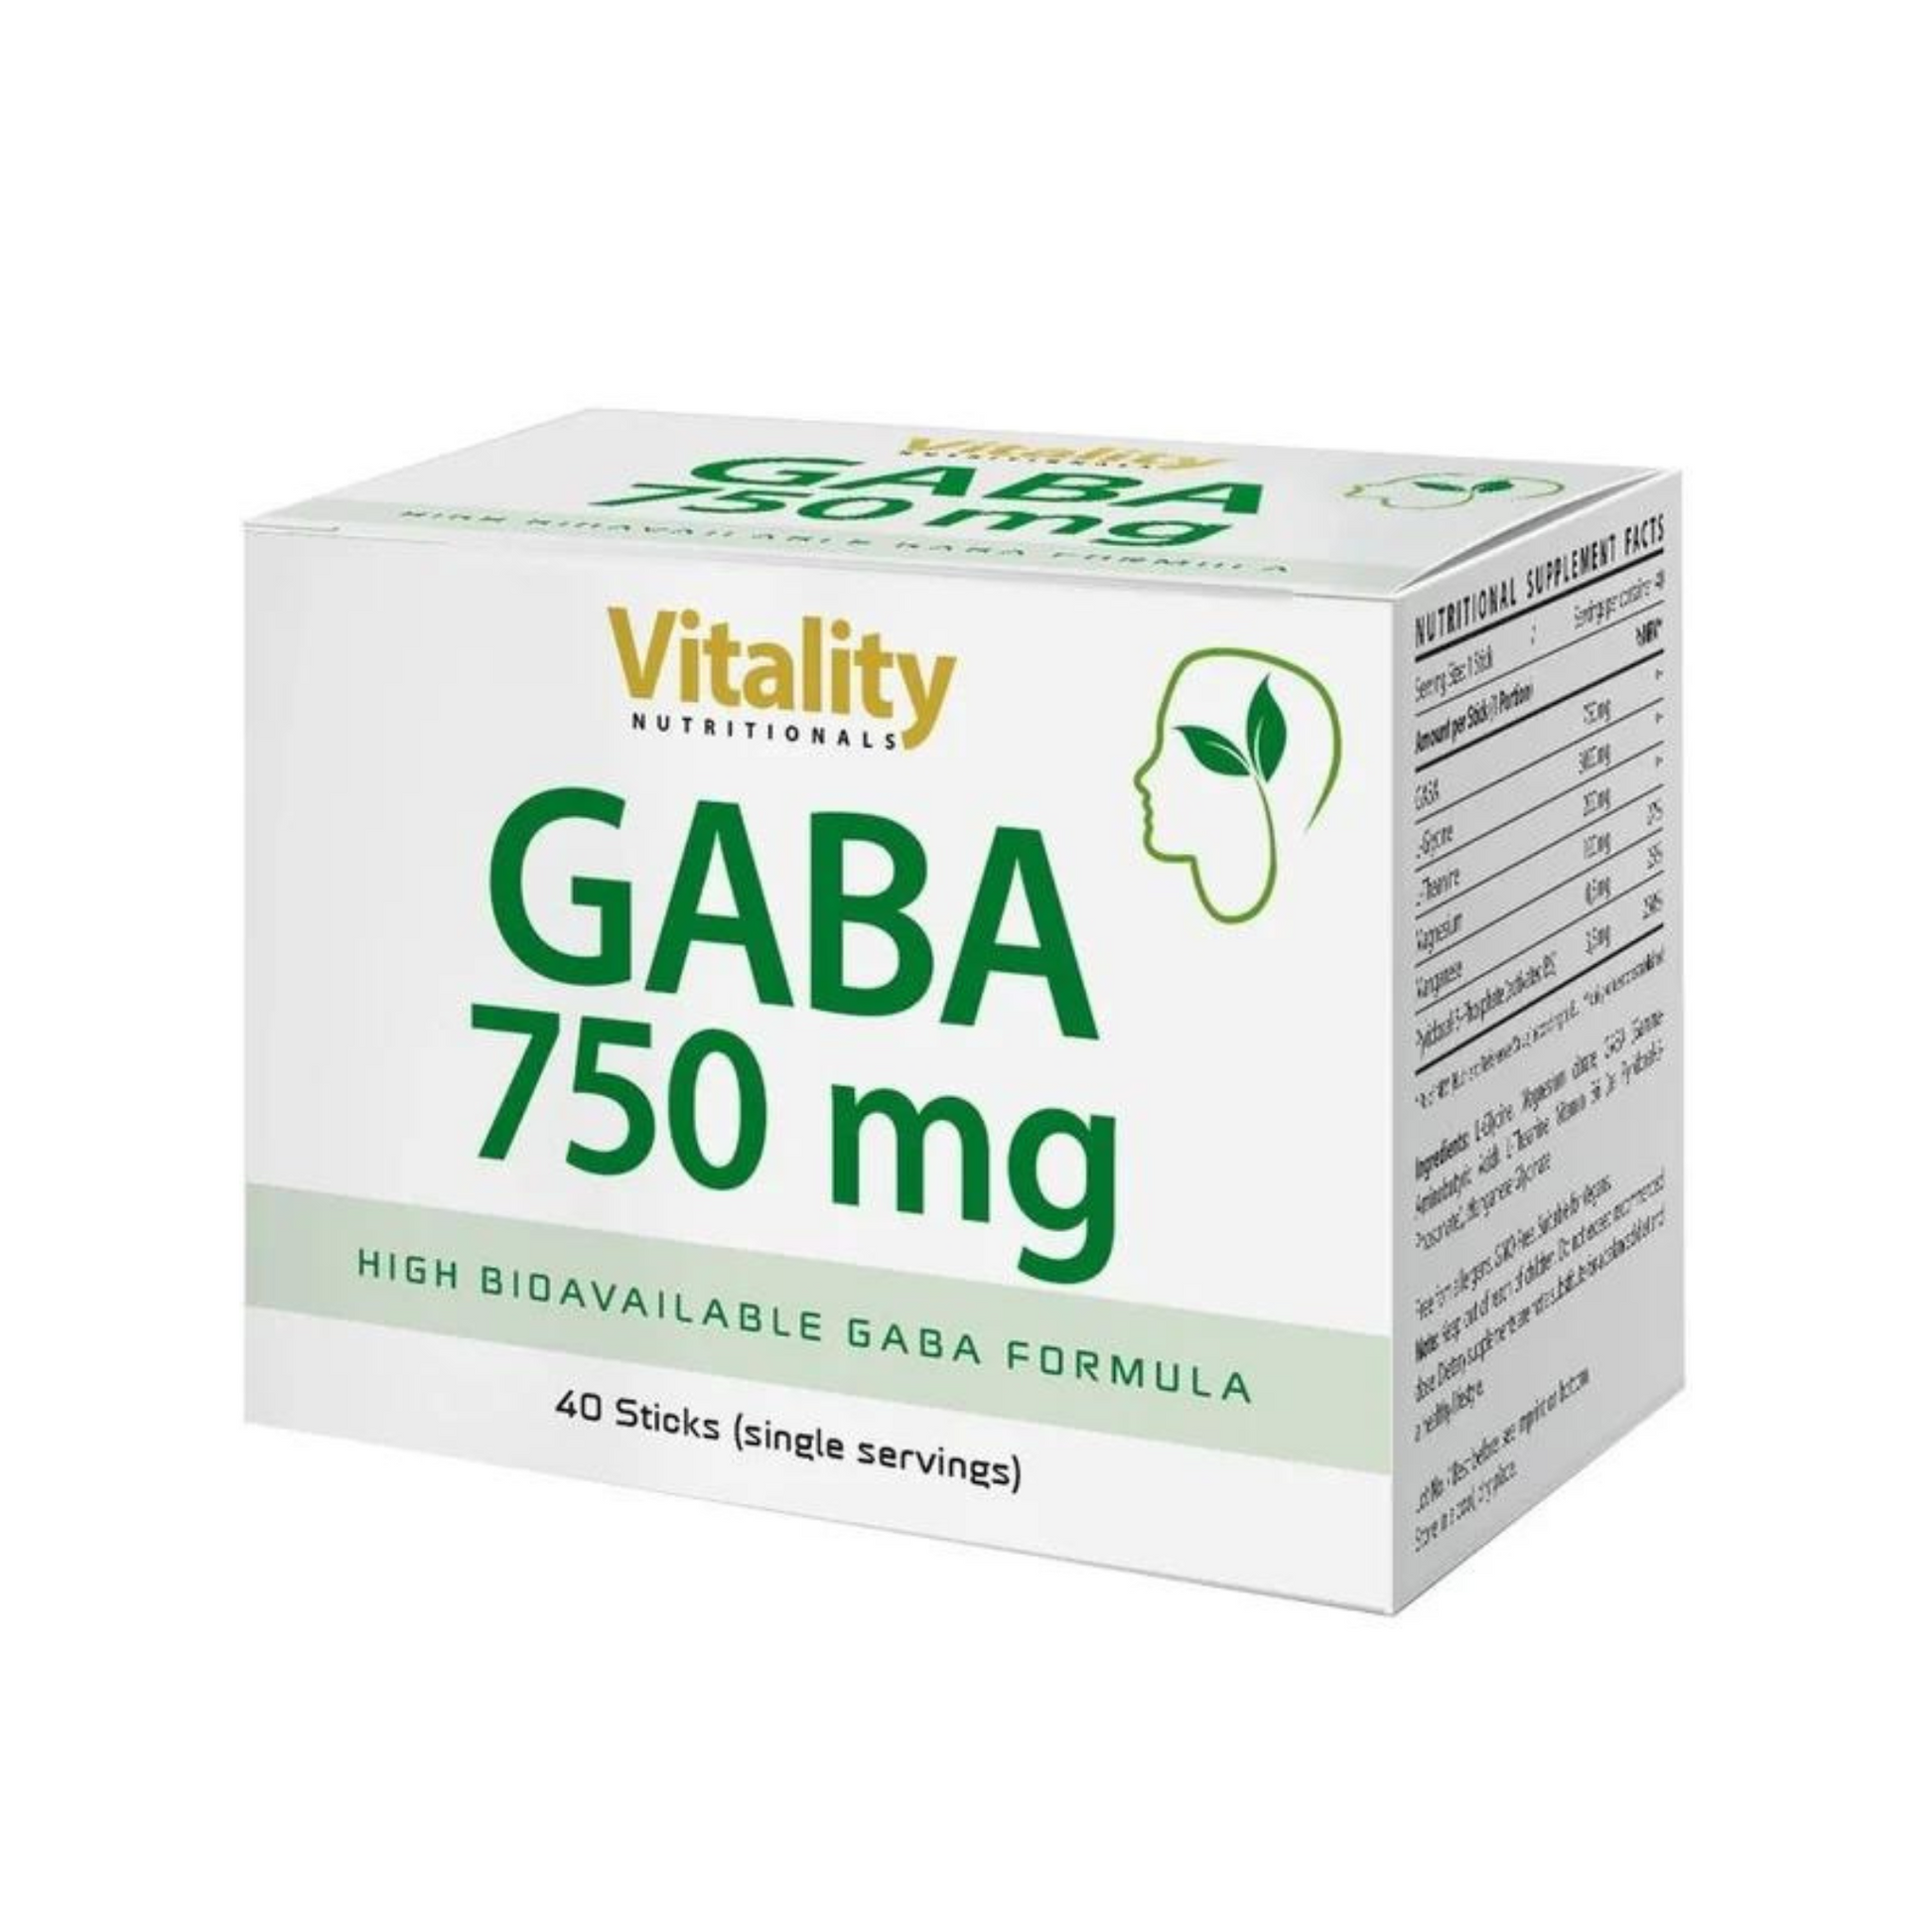 Vitality Gaba 40 Sticks